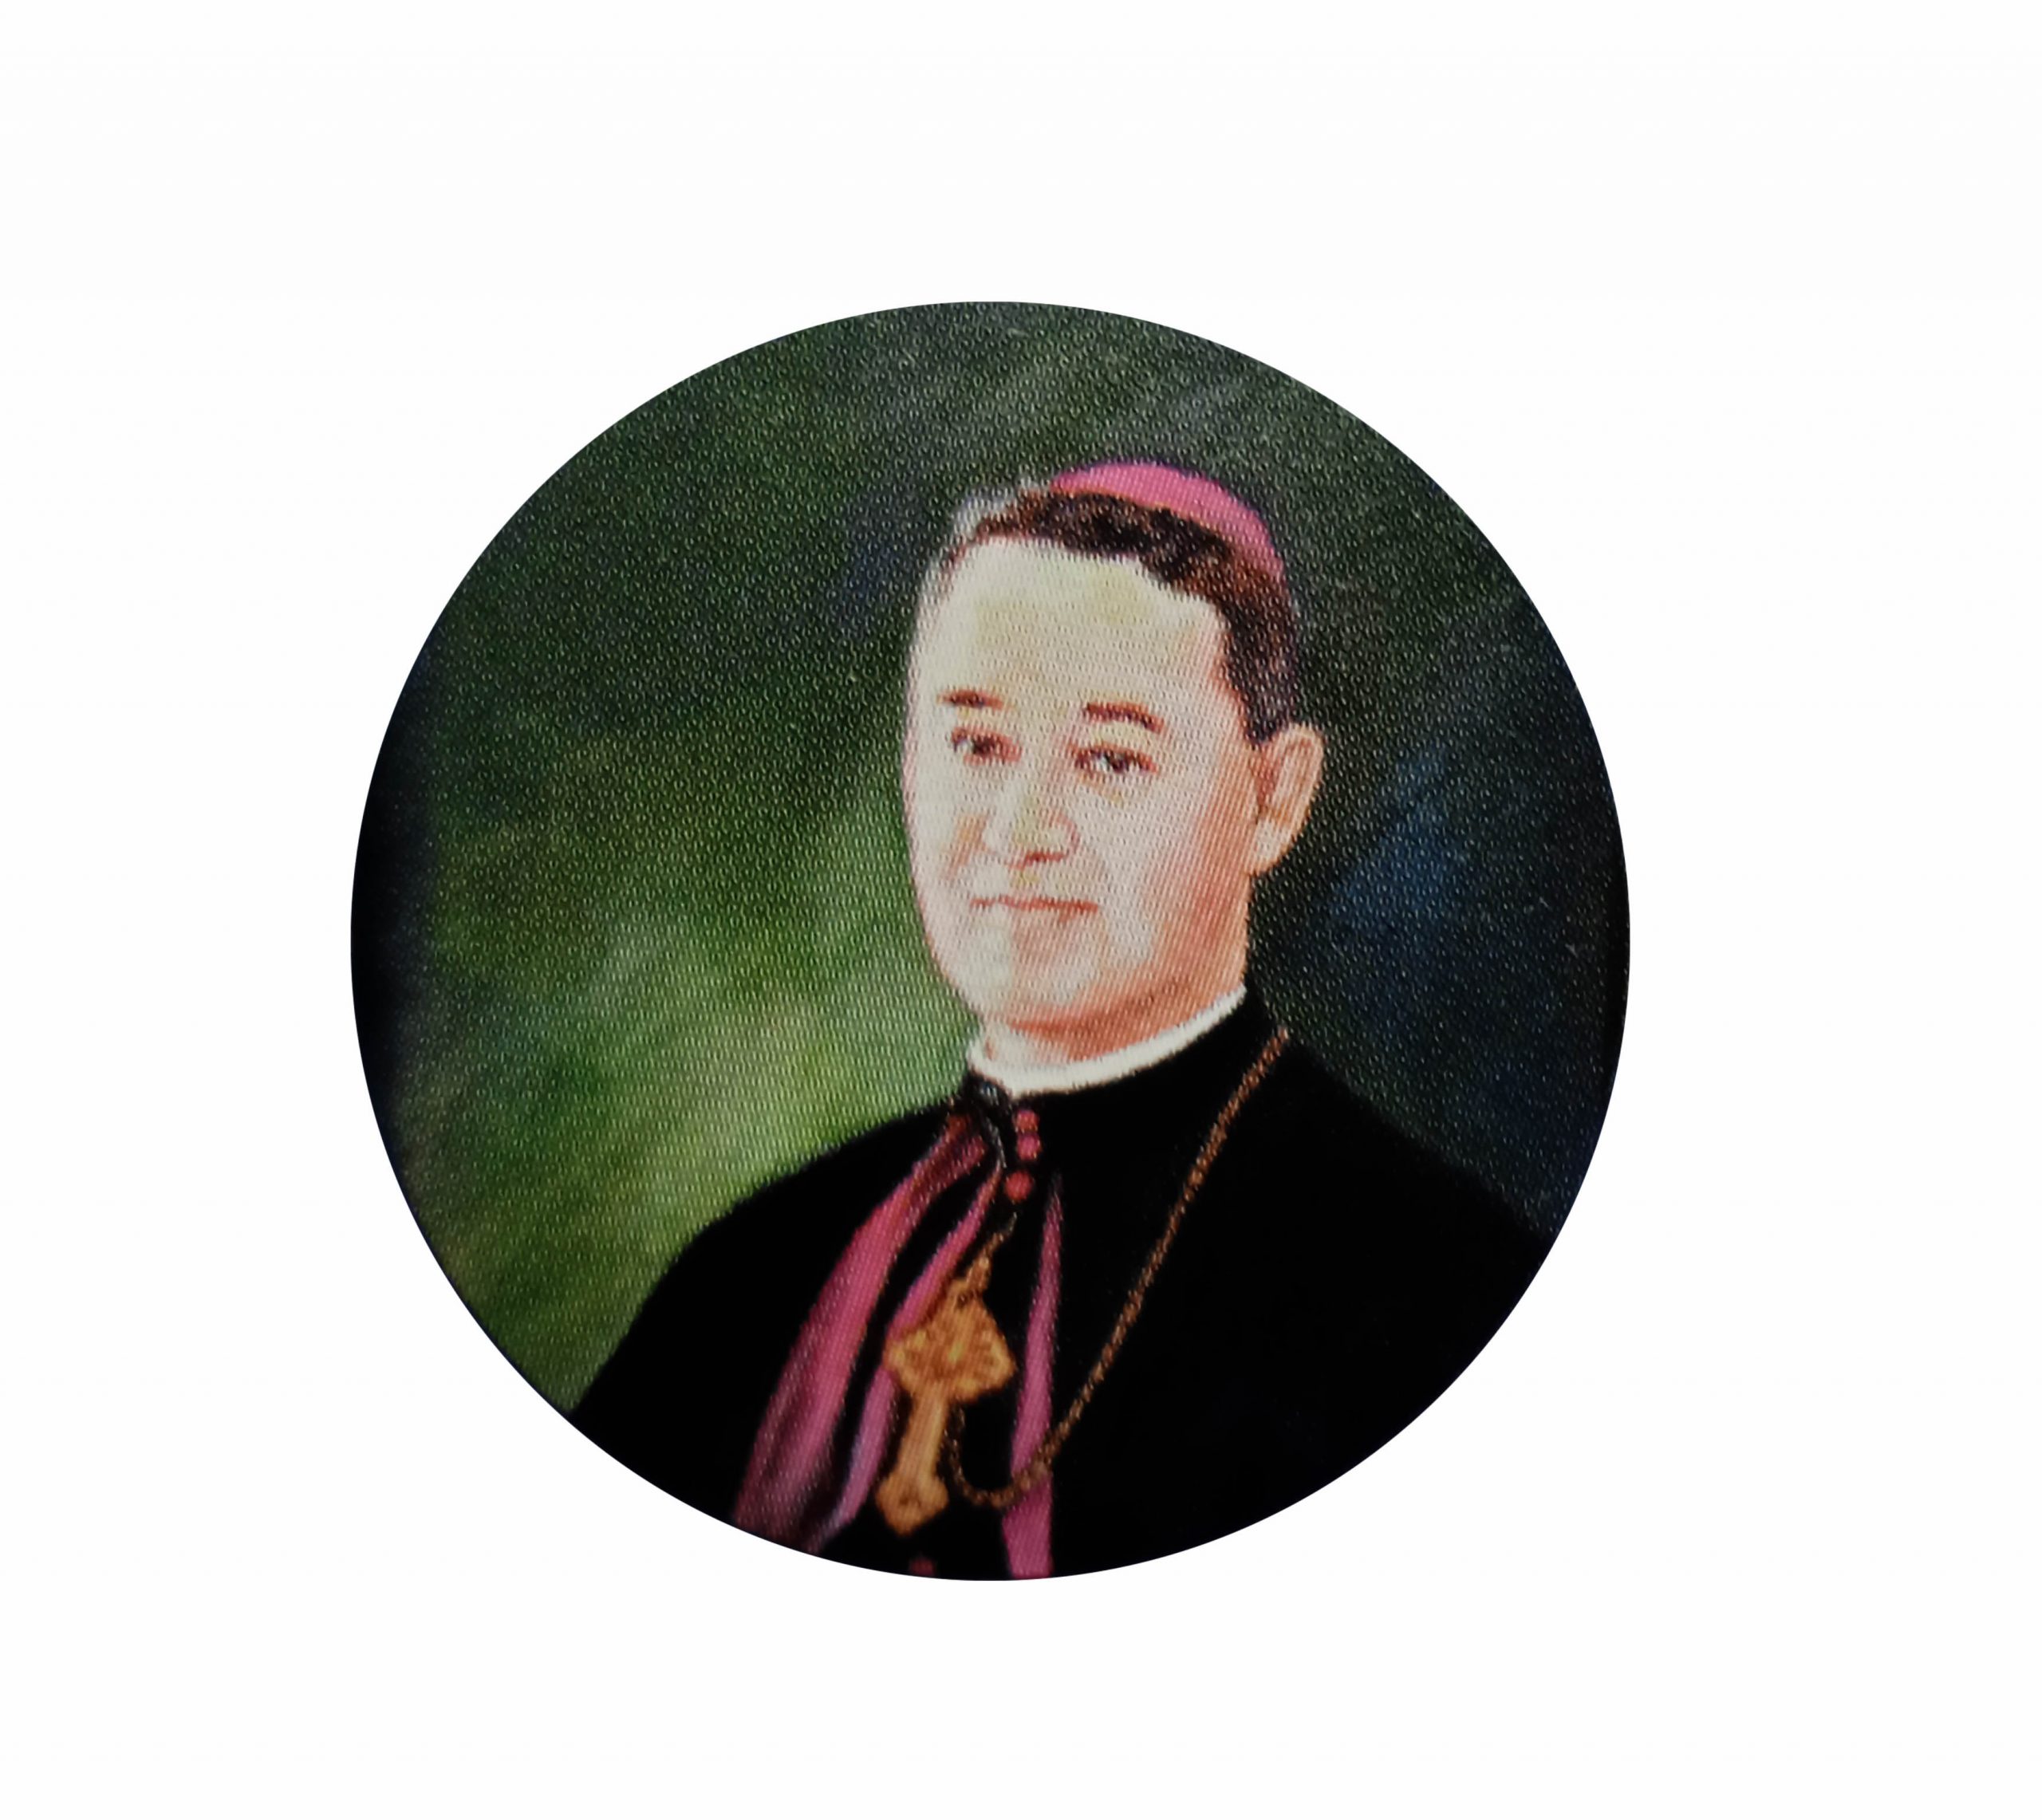 Mons. Miguel Ángel Builes Gómez